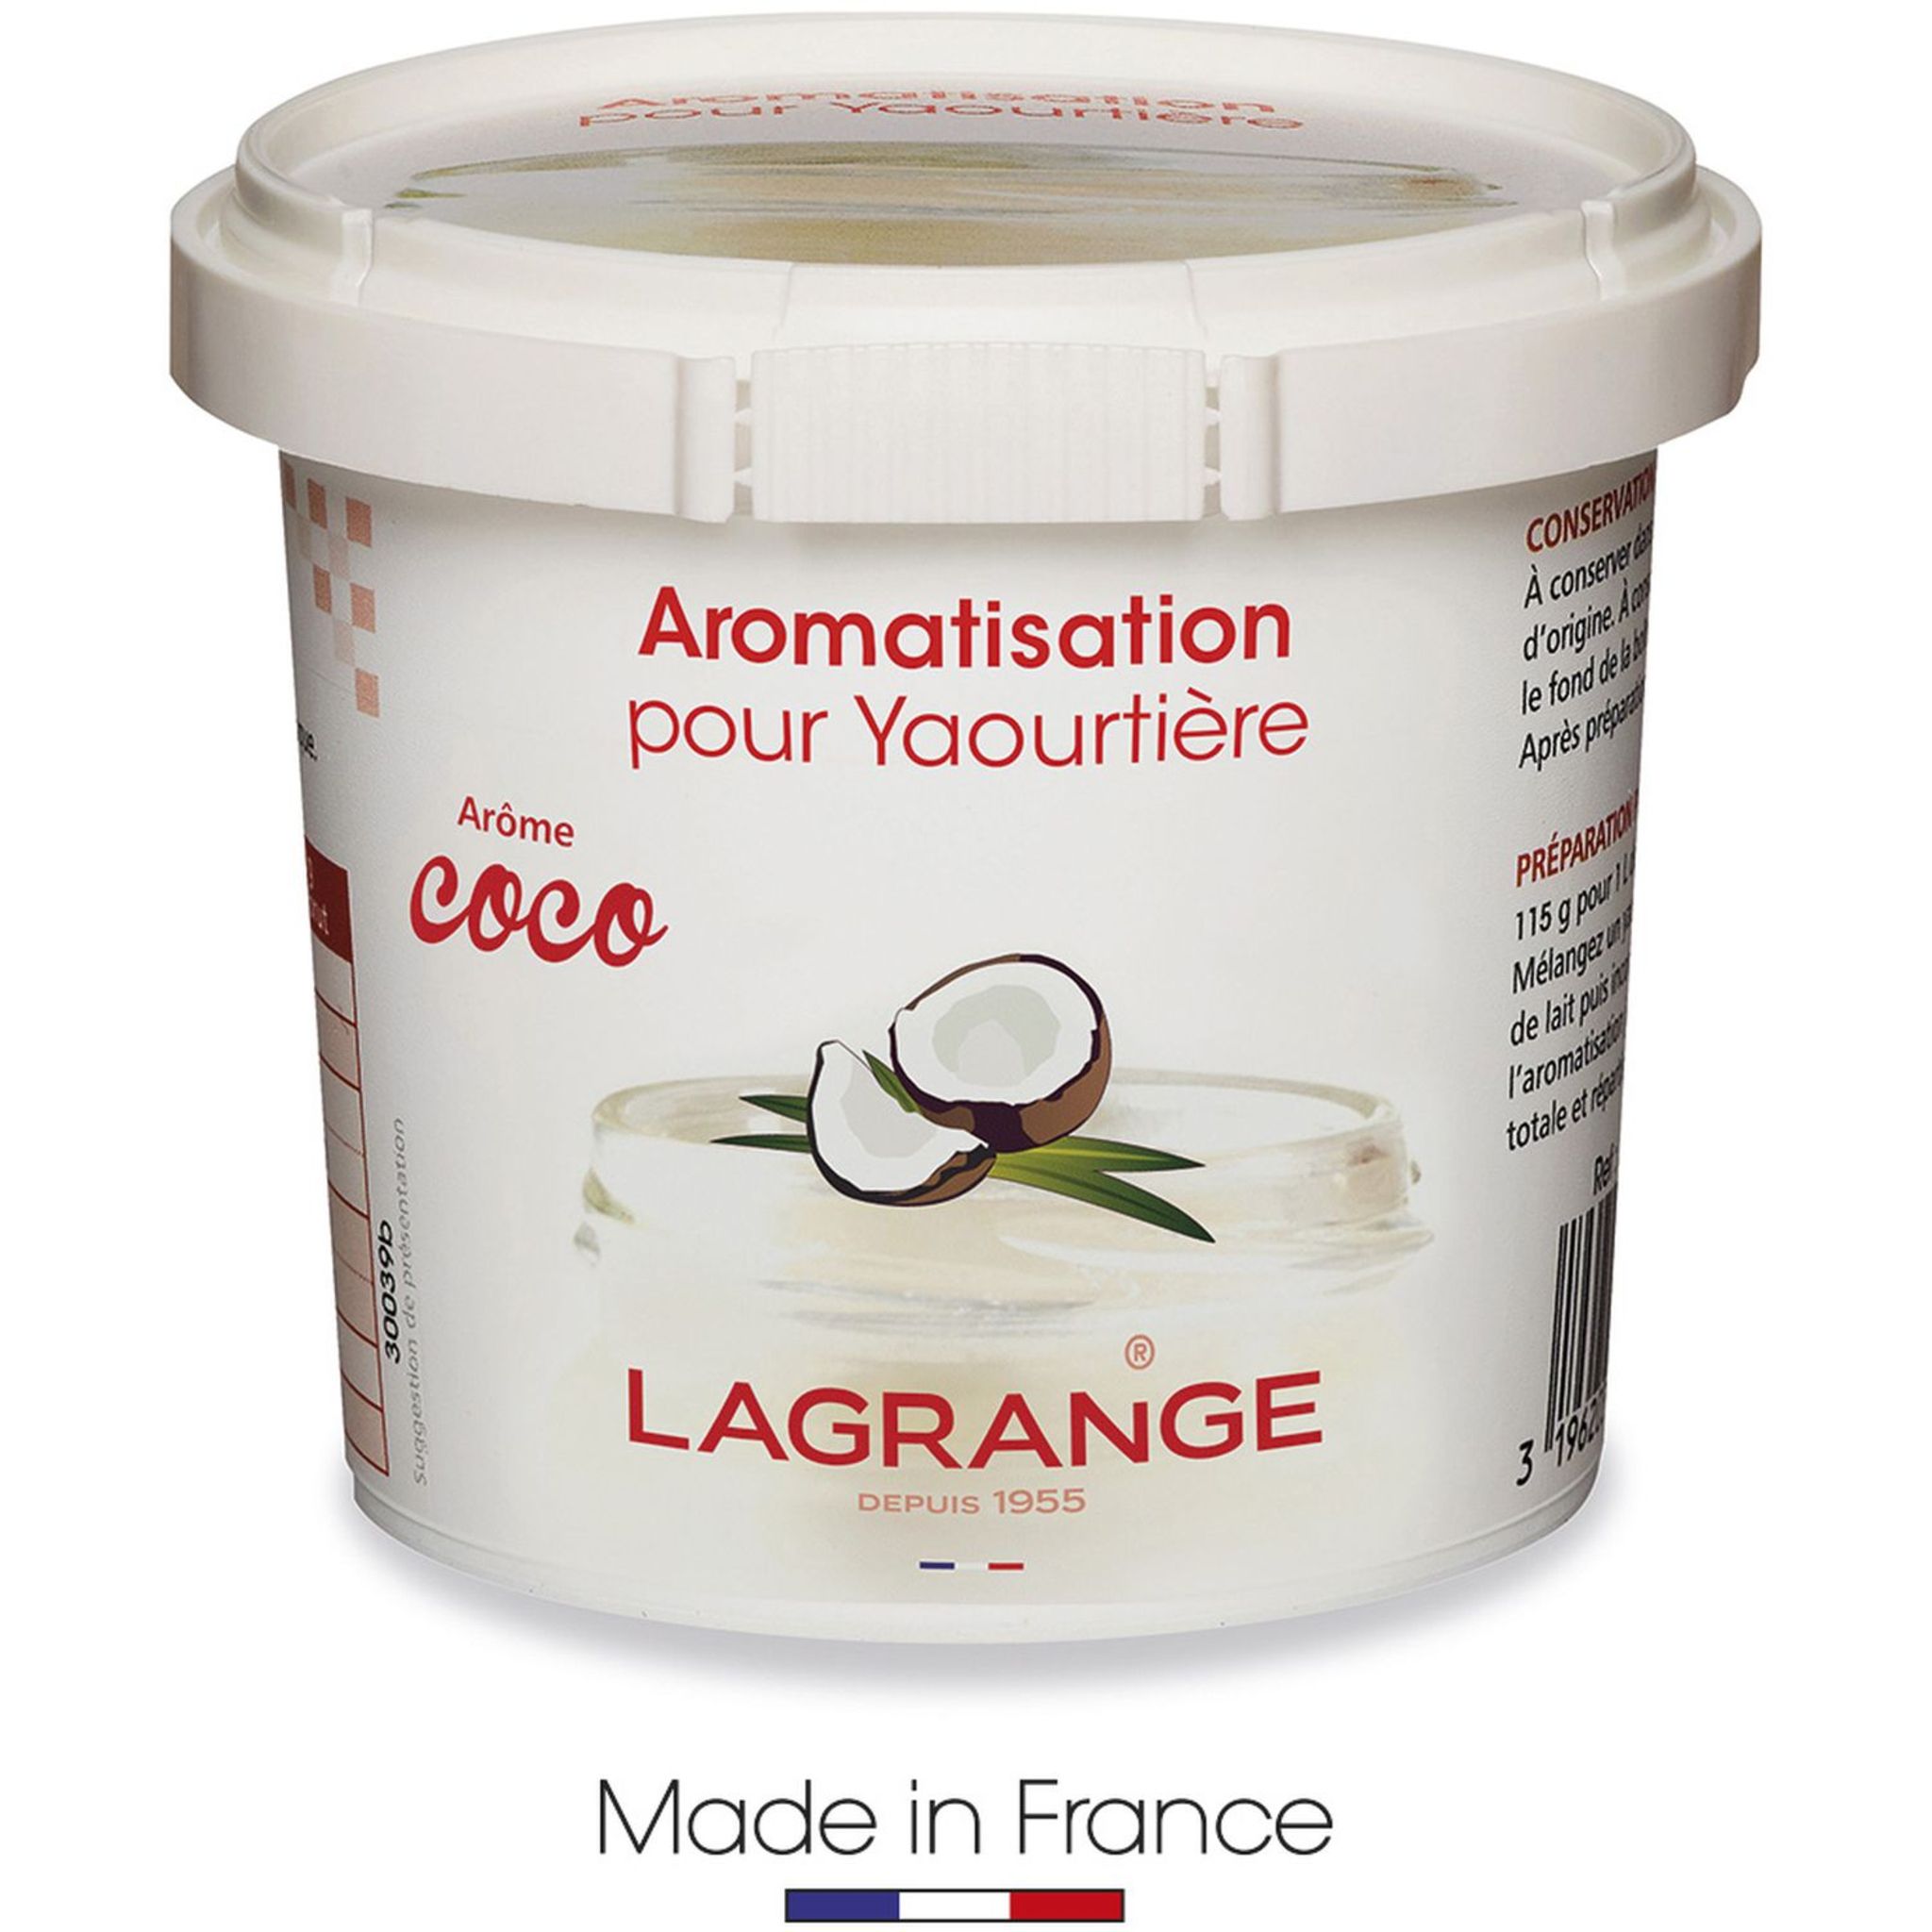 Lagrange 380030 Aromatisation pour yaourtière Coco 